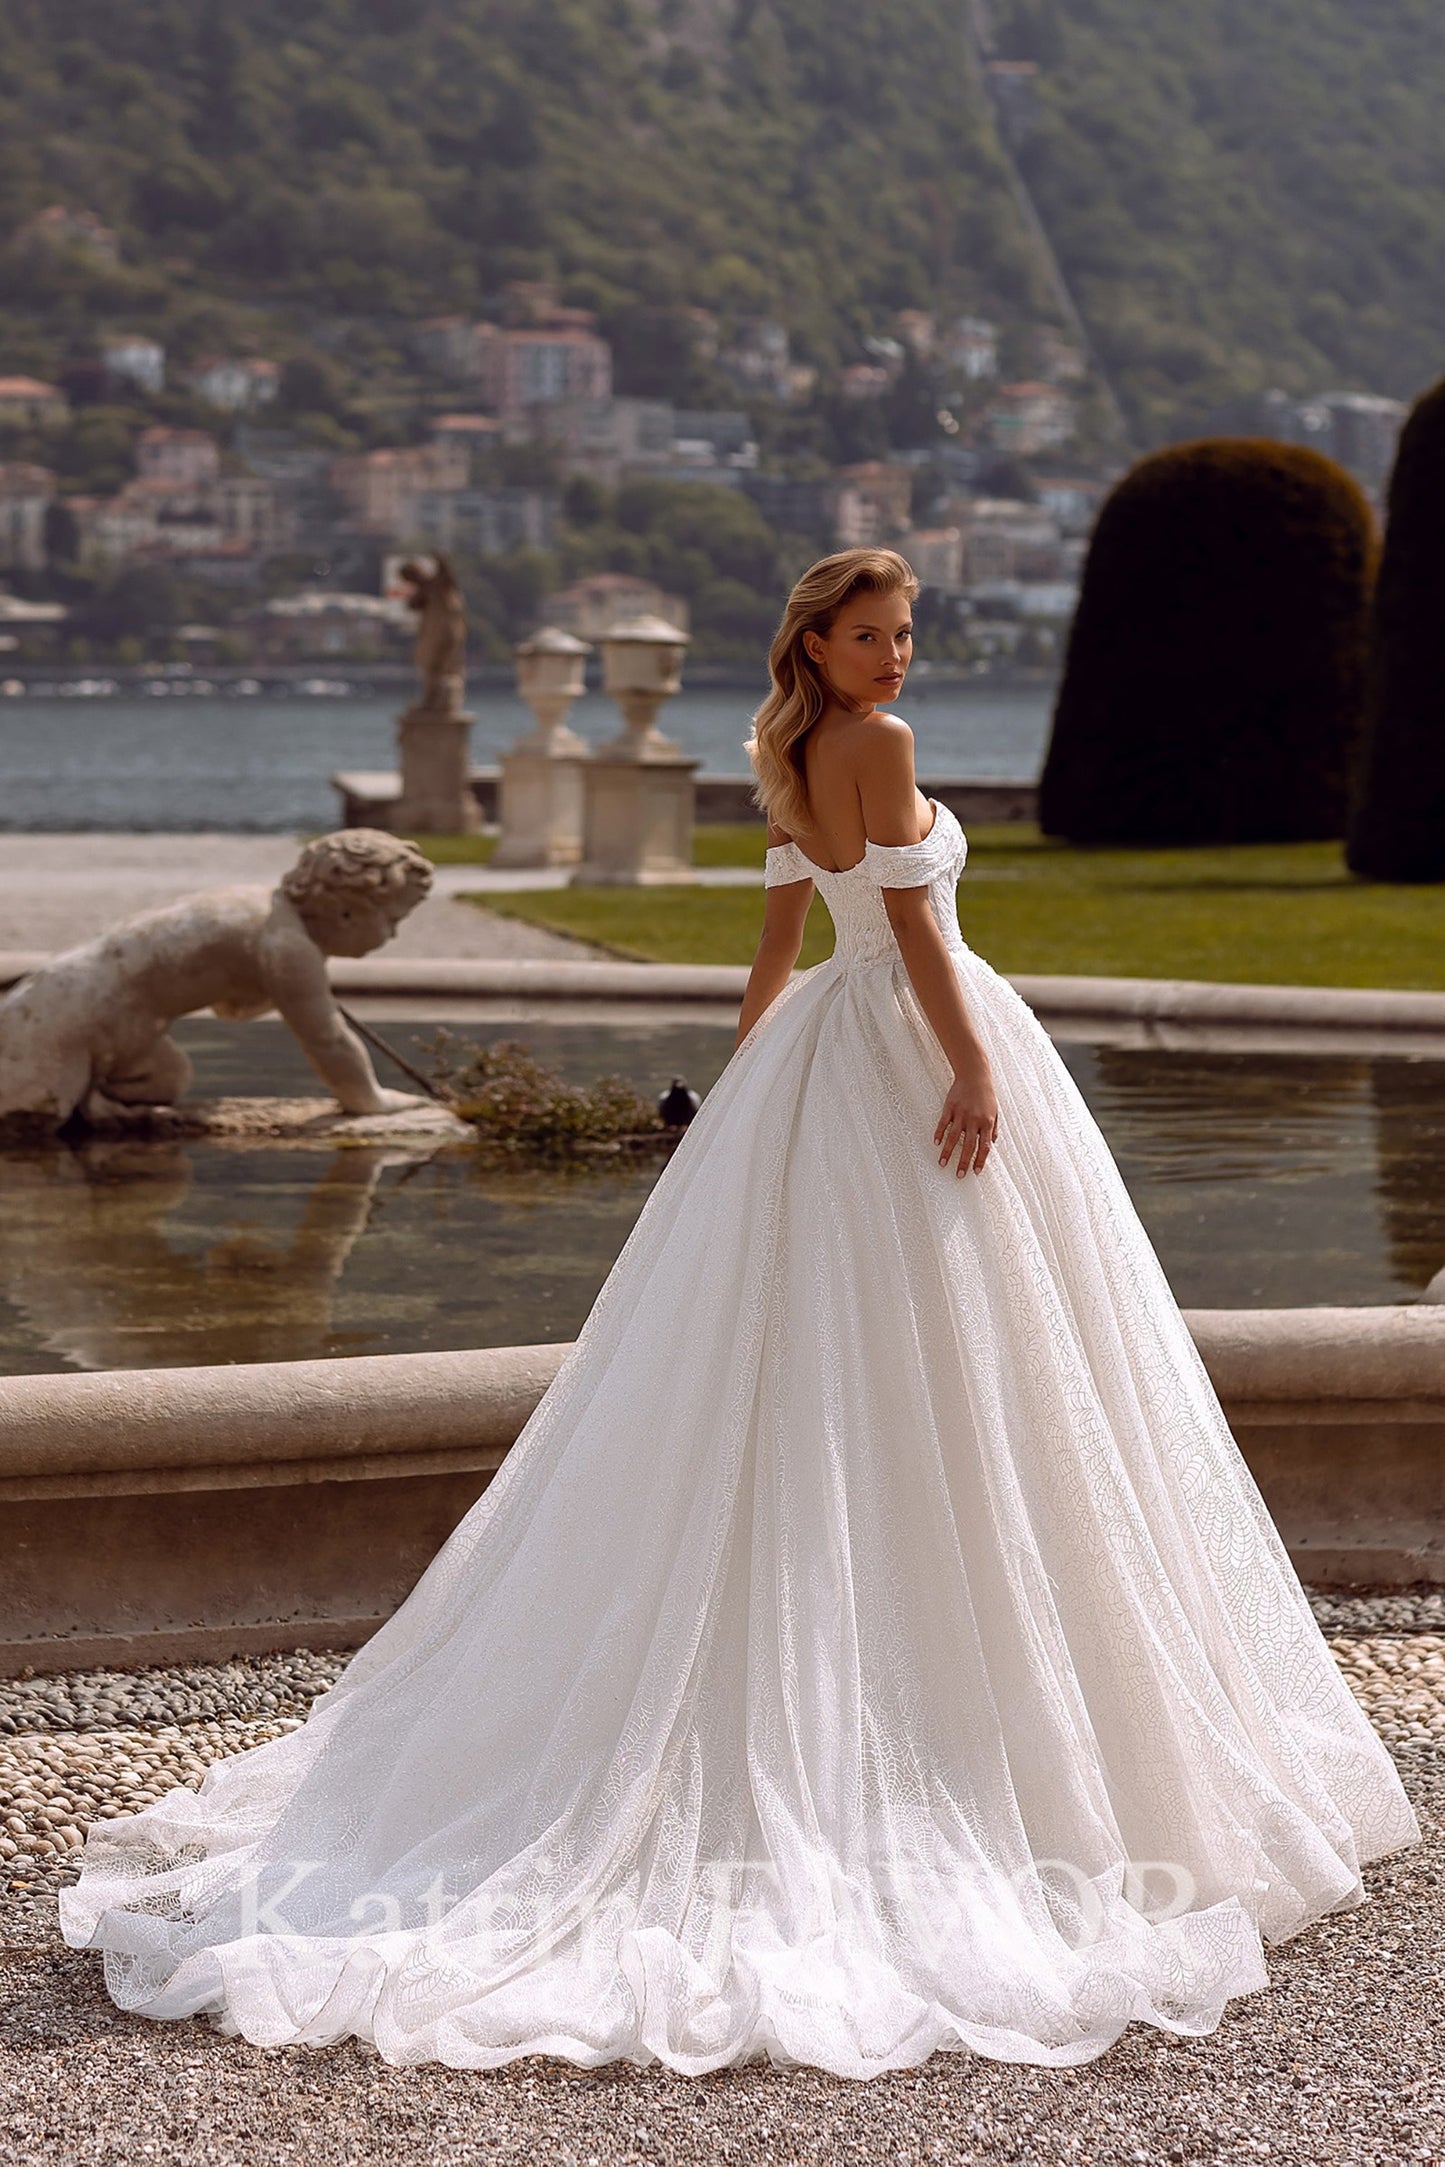 KatrinFAVORboutique-Fairy ballgown princess wedding dress